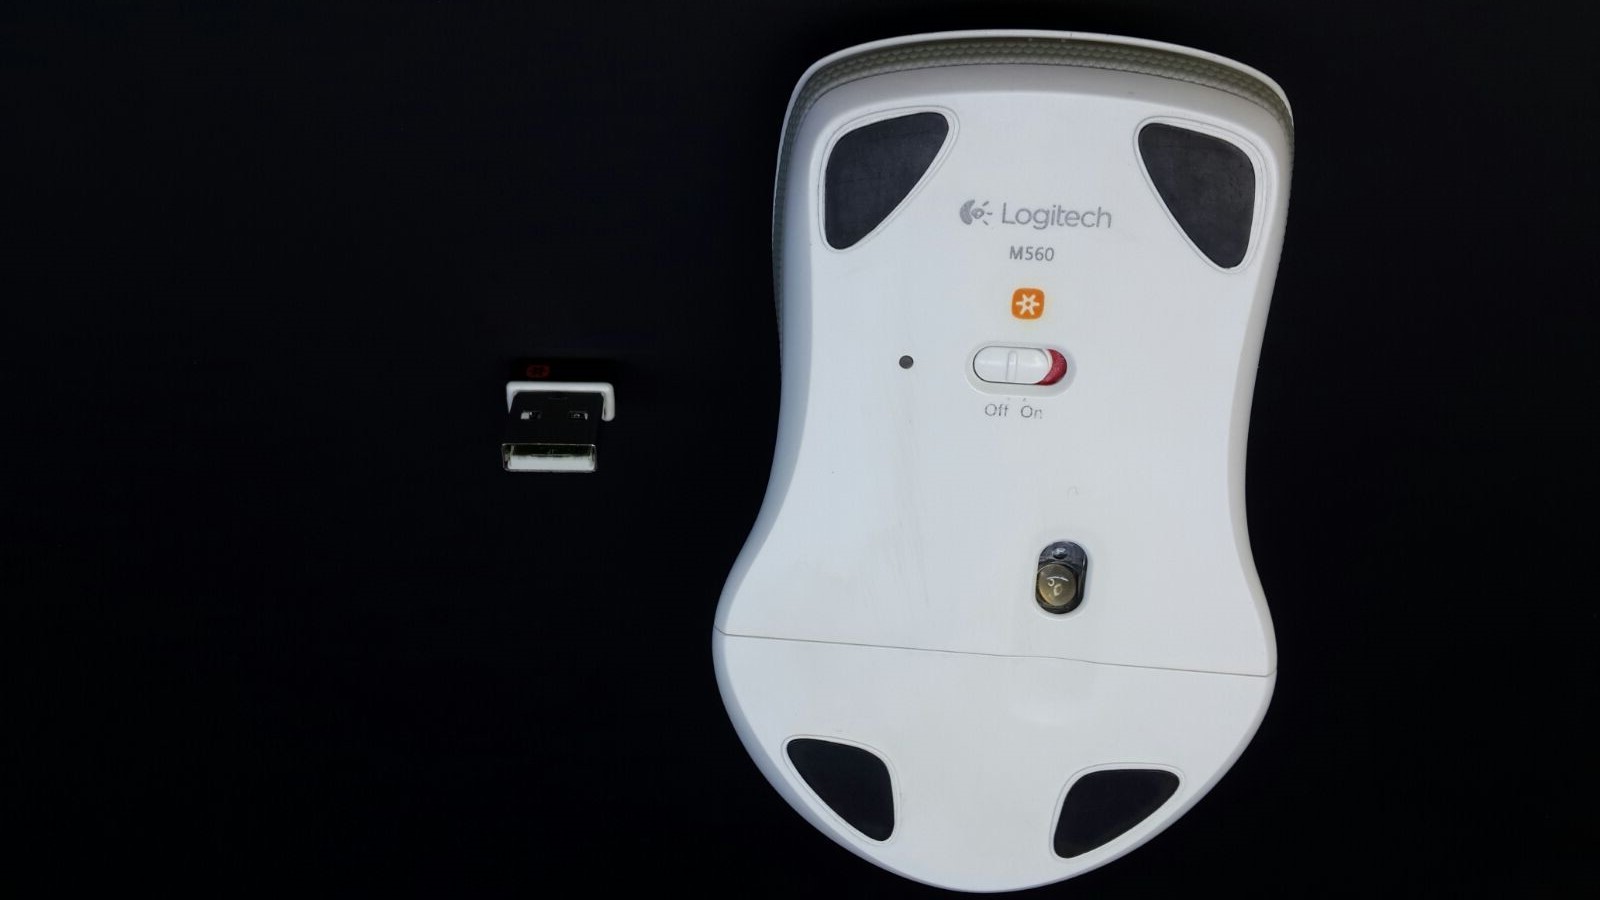 Logitech M560 Wireless Mouse Beyaz Renk​ 50 TL Kargo Dahil